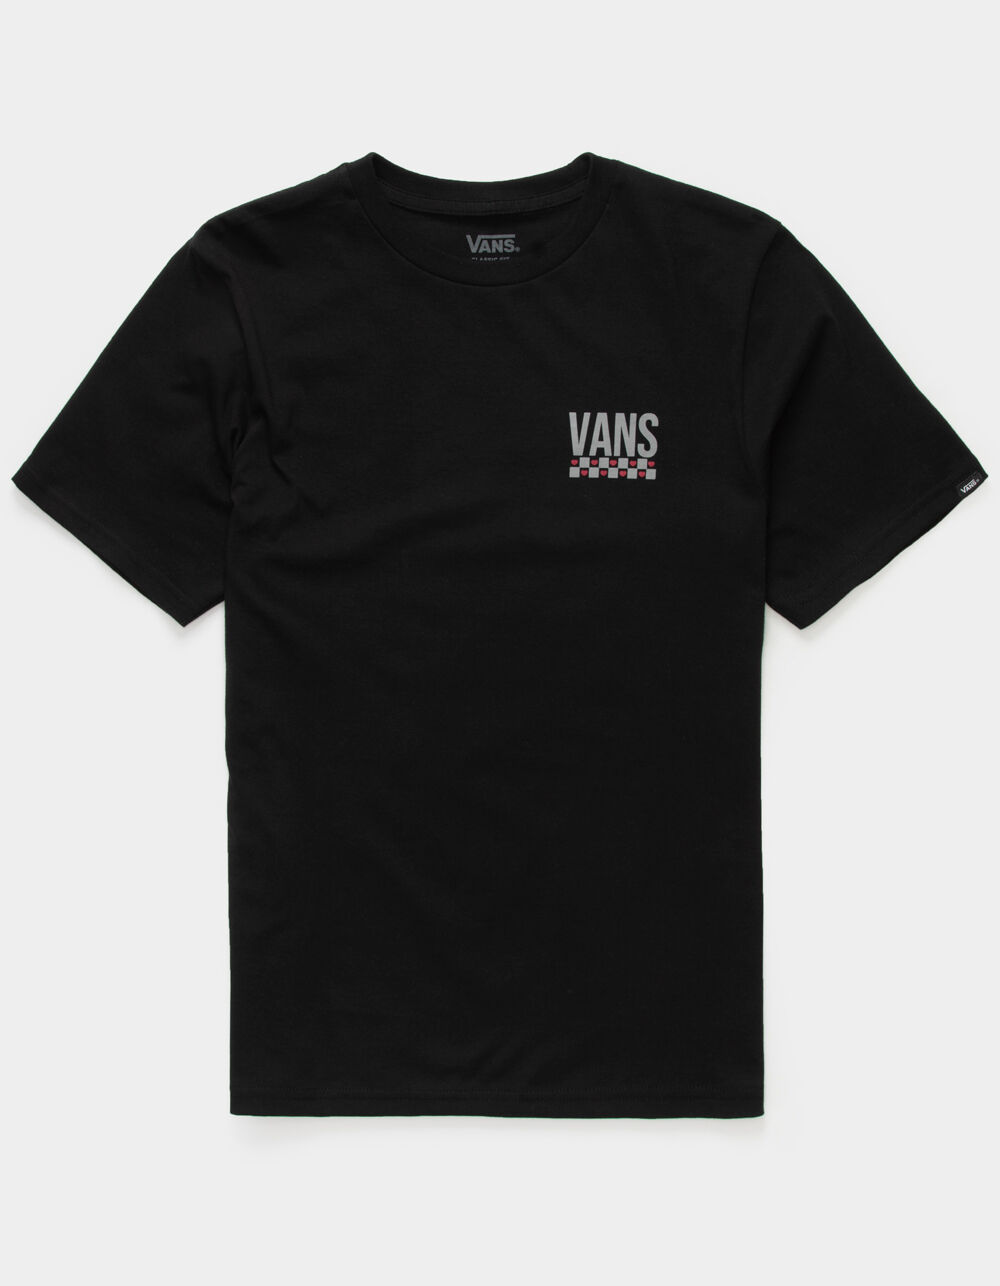 VANS OTW Check Stack Boys T-Shirt - BLACK | Tillys